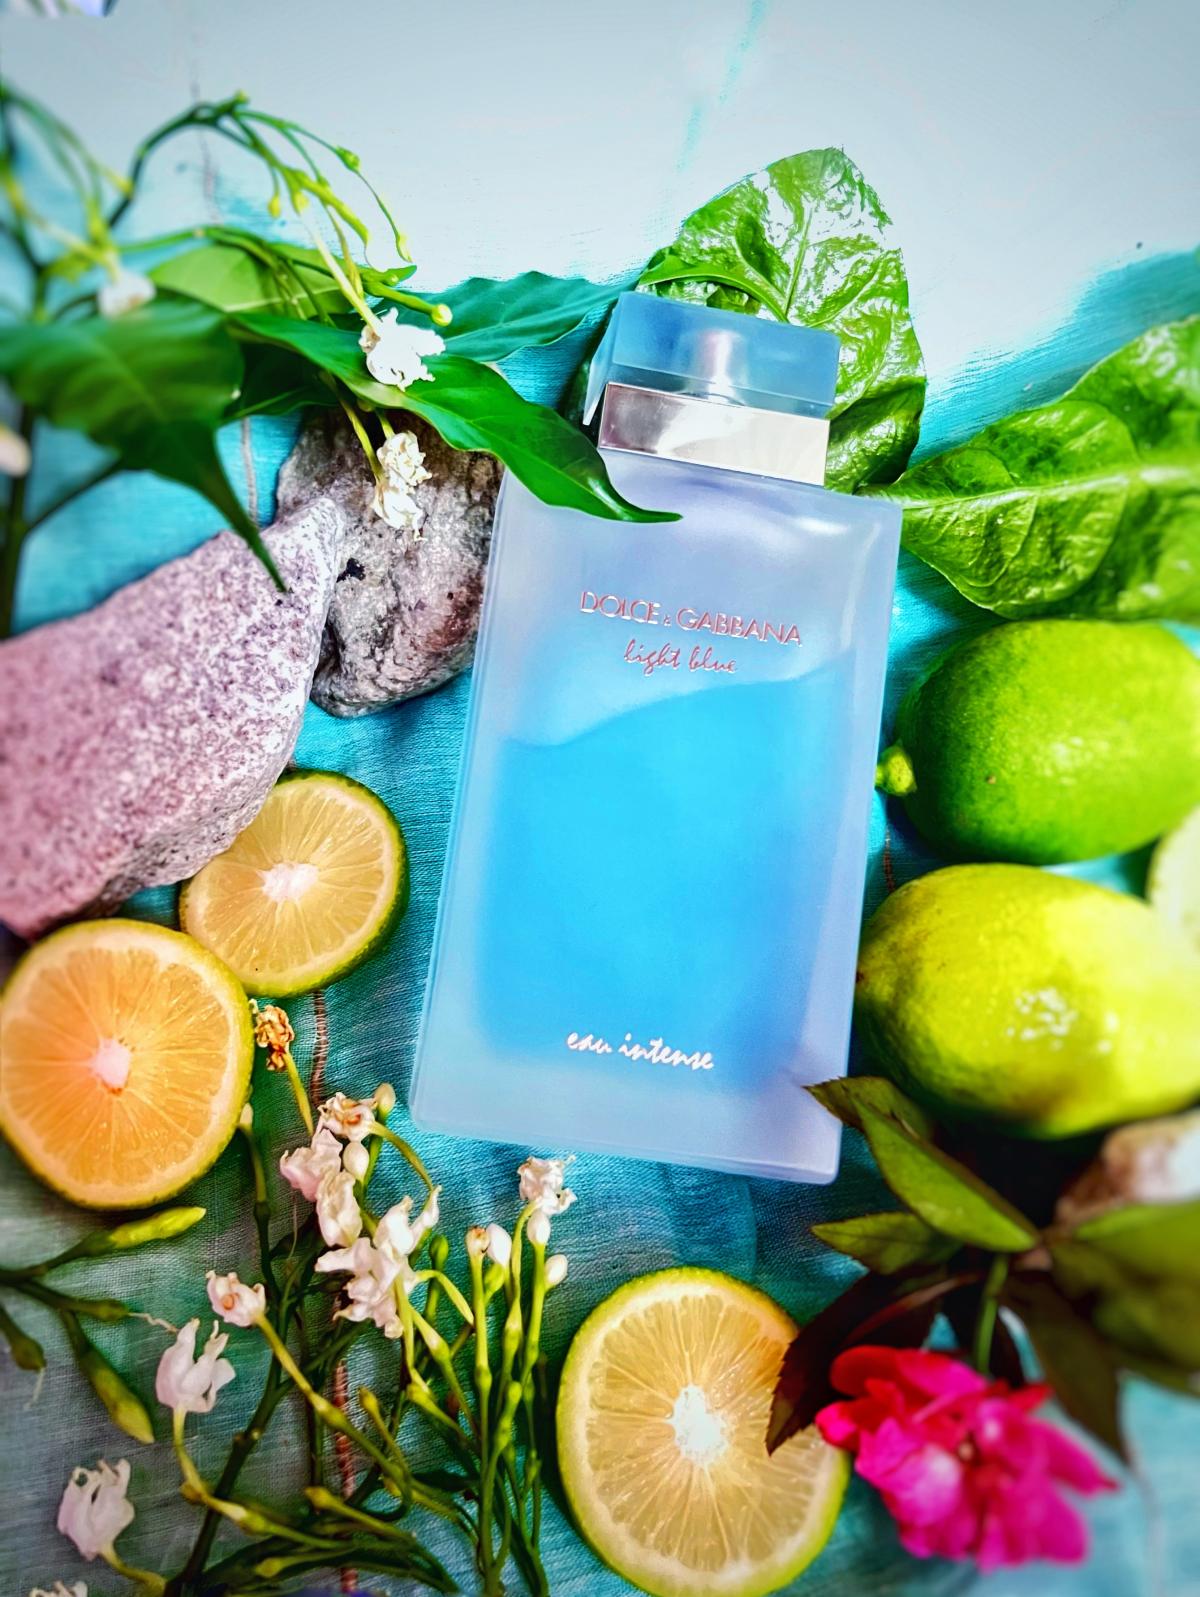 Light Blue Eau Intense Dolce&Gabbana perfume - a fragrance for women 2017